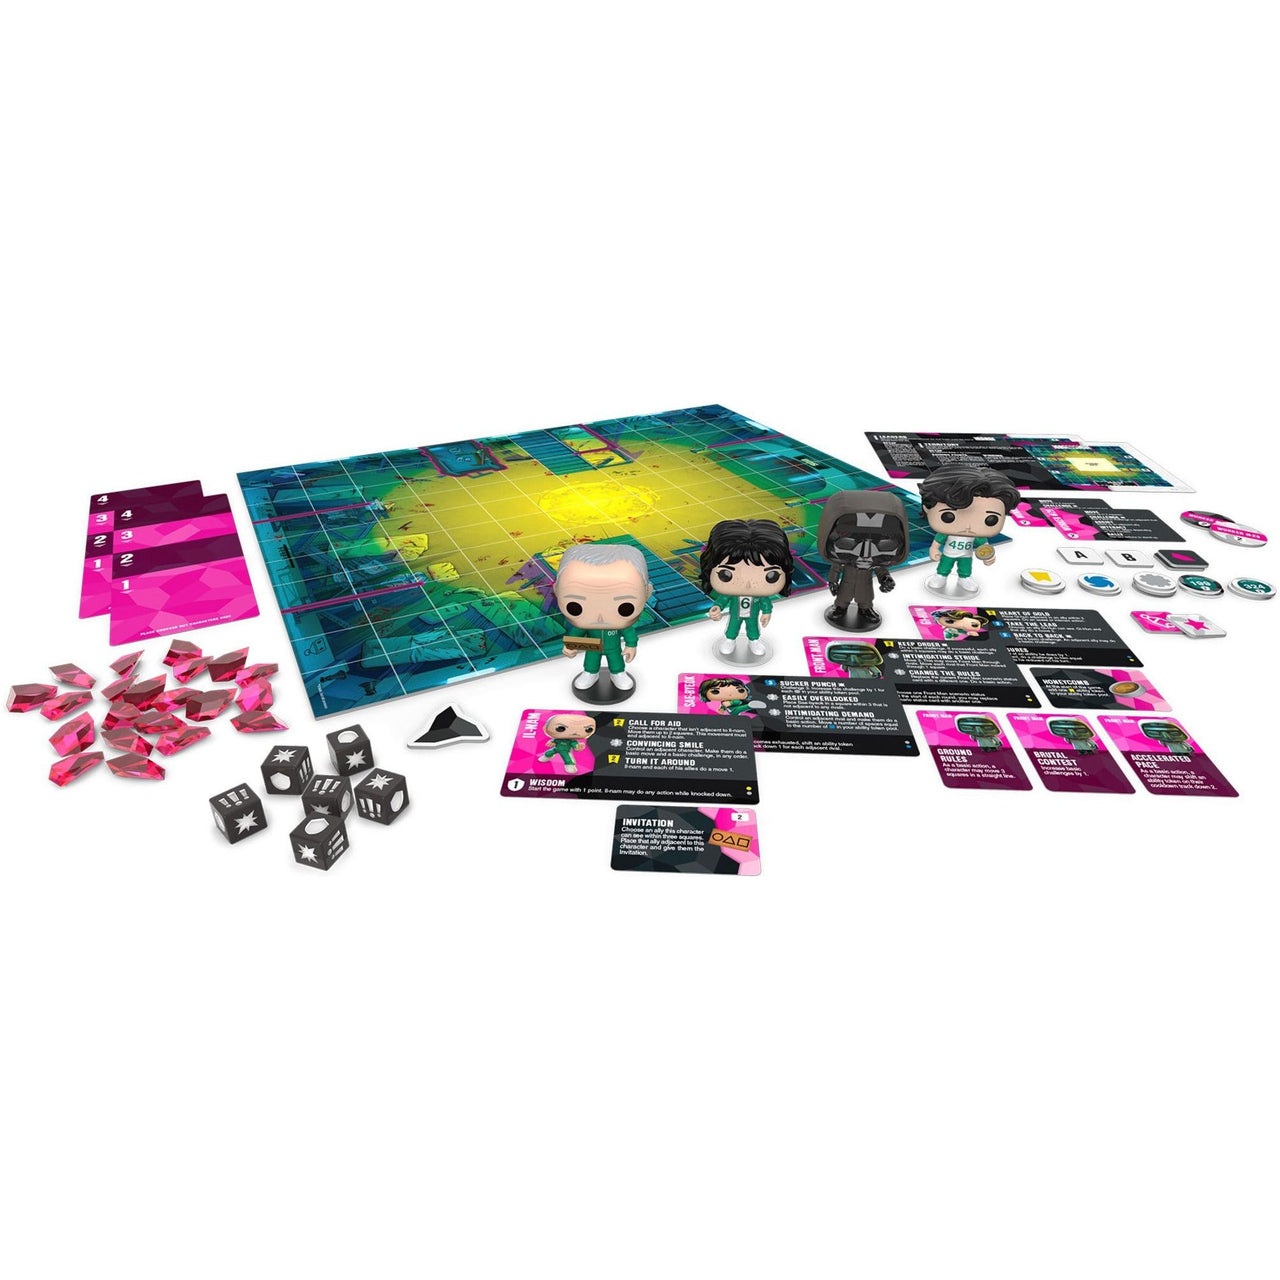 Funko Games - Squid Game Strategy Game Funko